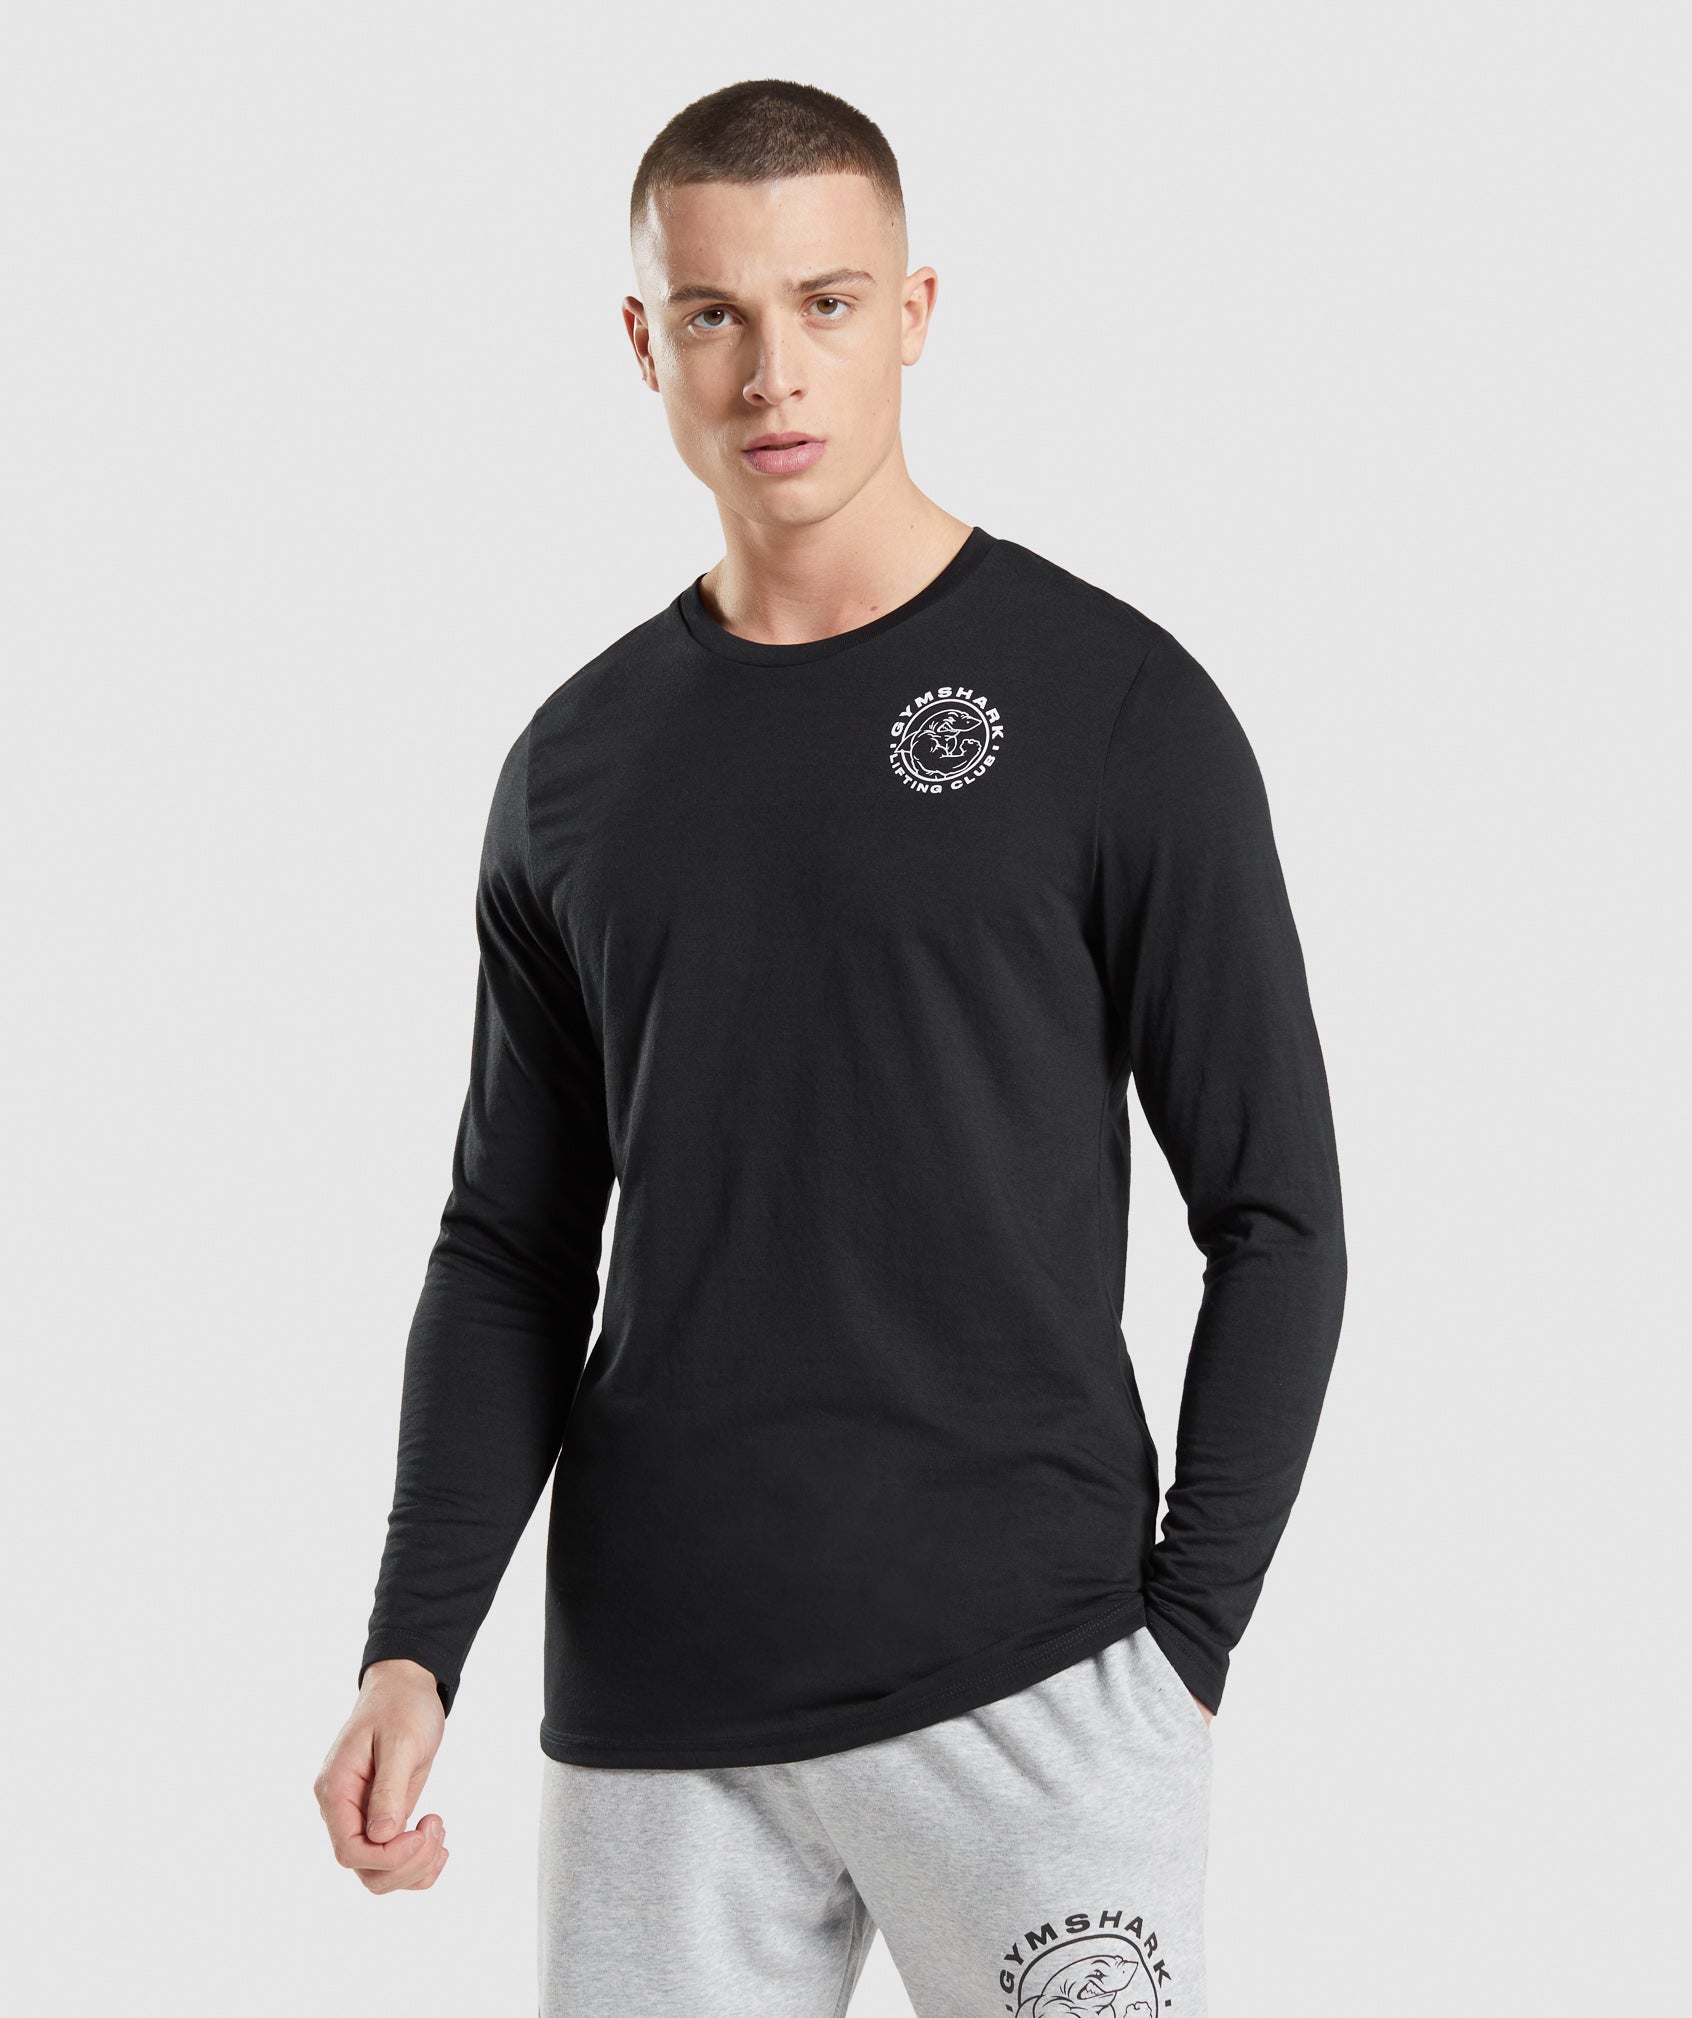 Black Basketball Shark Mouth Long Sleeve T-Shirt - GBNY